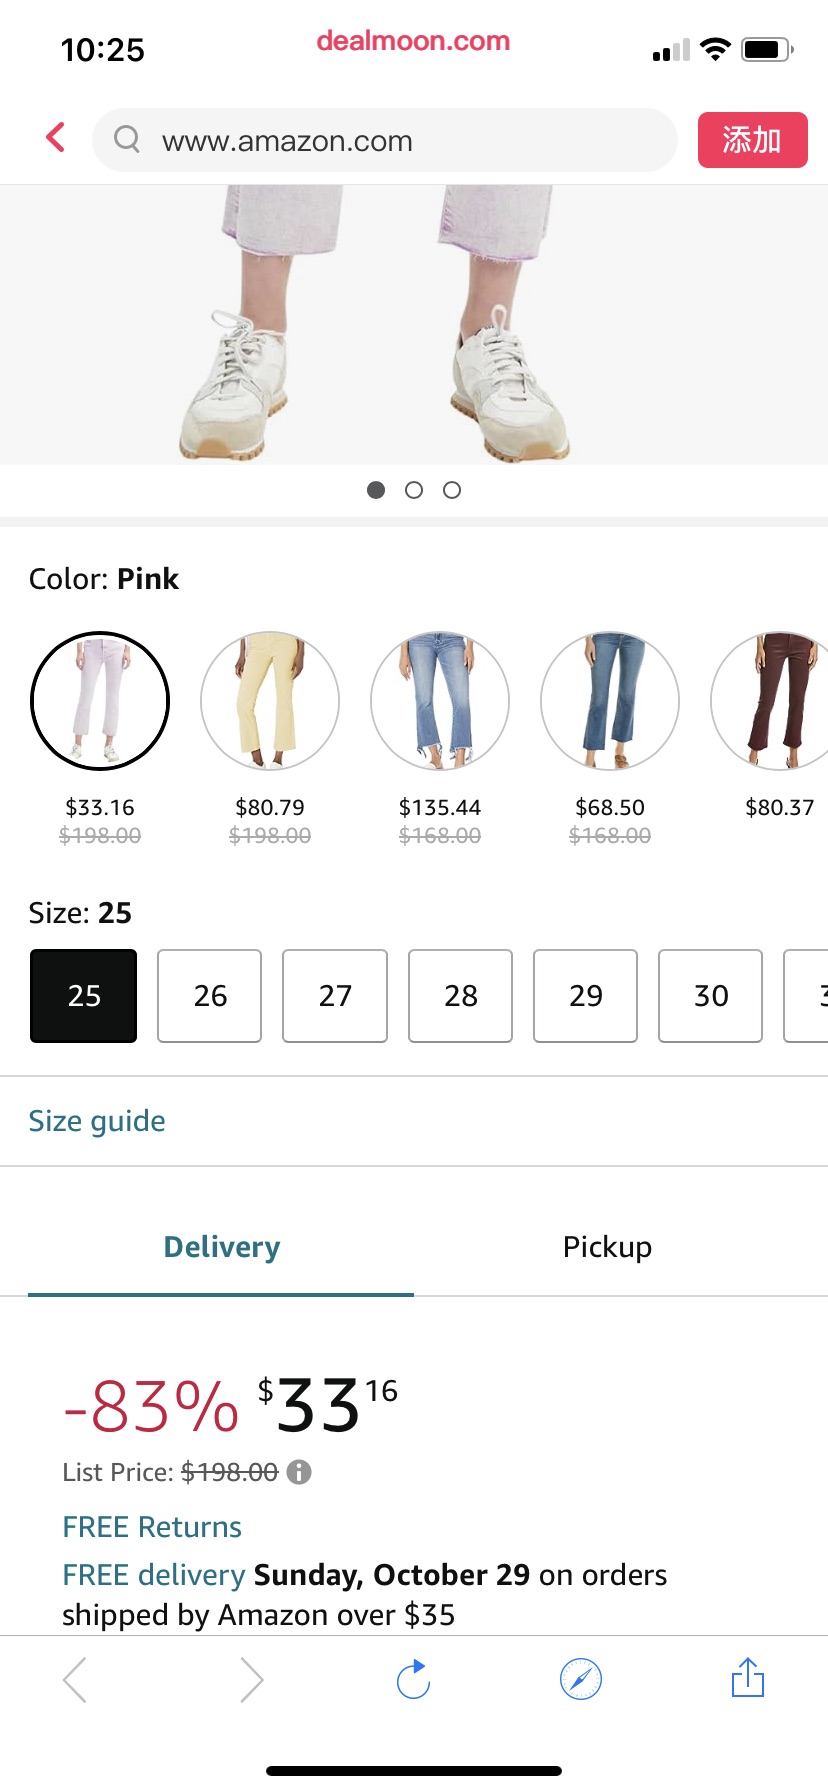 7 For All Mankind Women's High-Waist Slim Kick Jeans, Pink at Amazon Women's Jeans store女粉色高腰牛仔裤